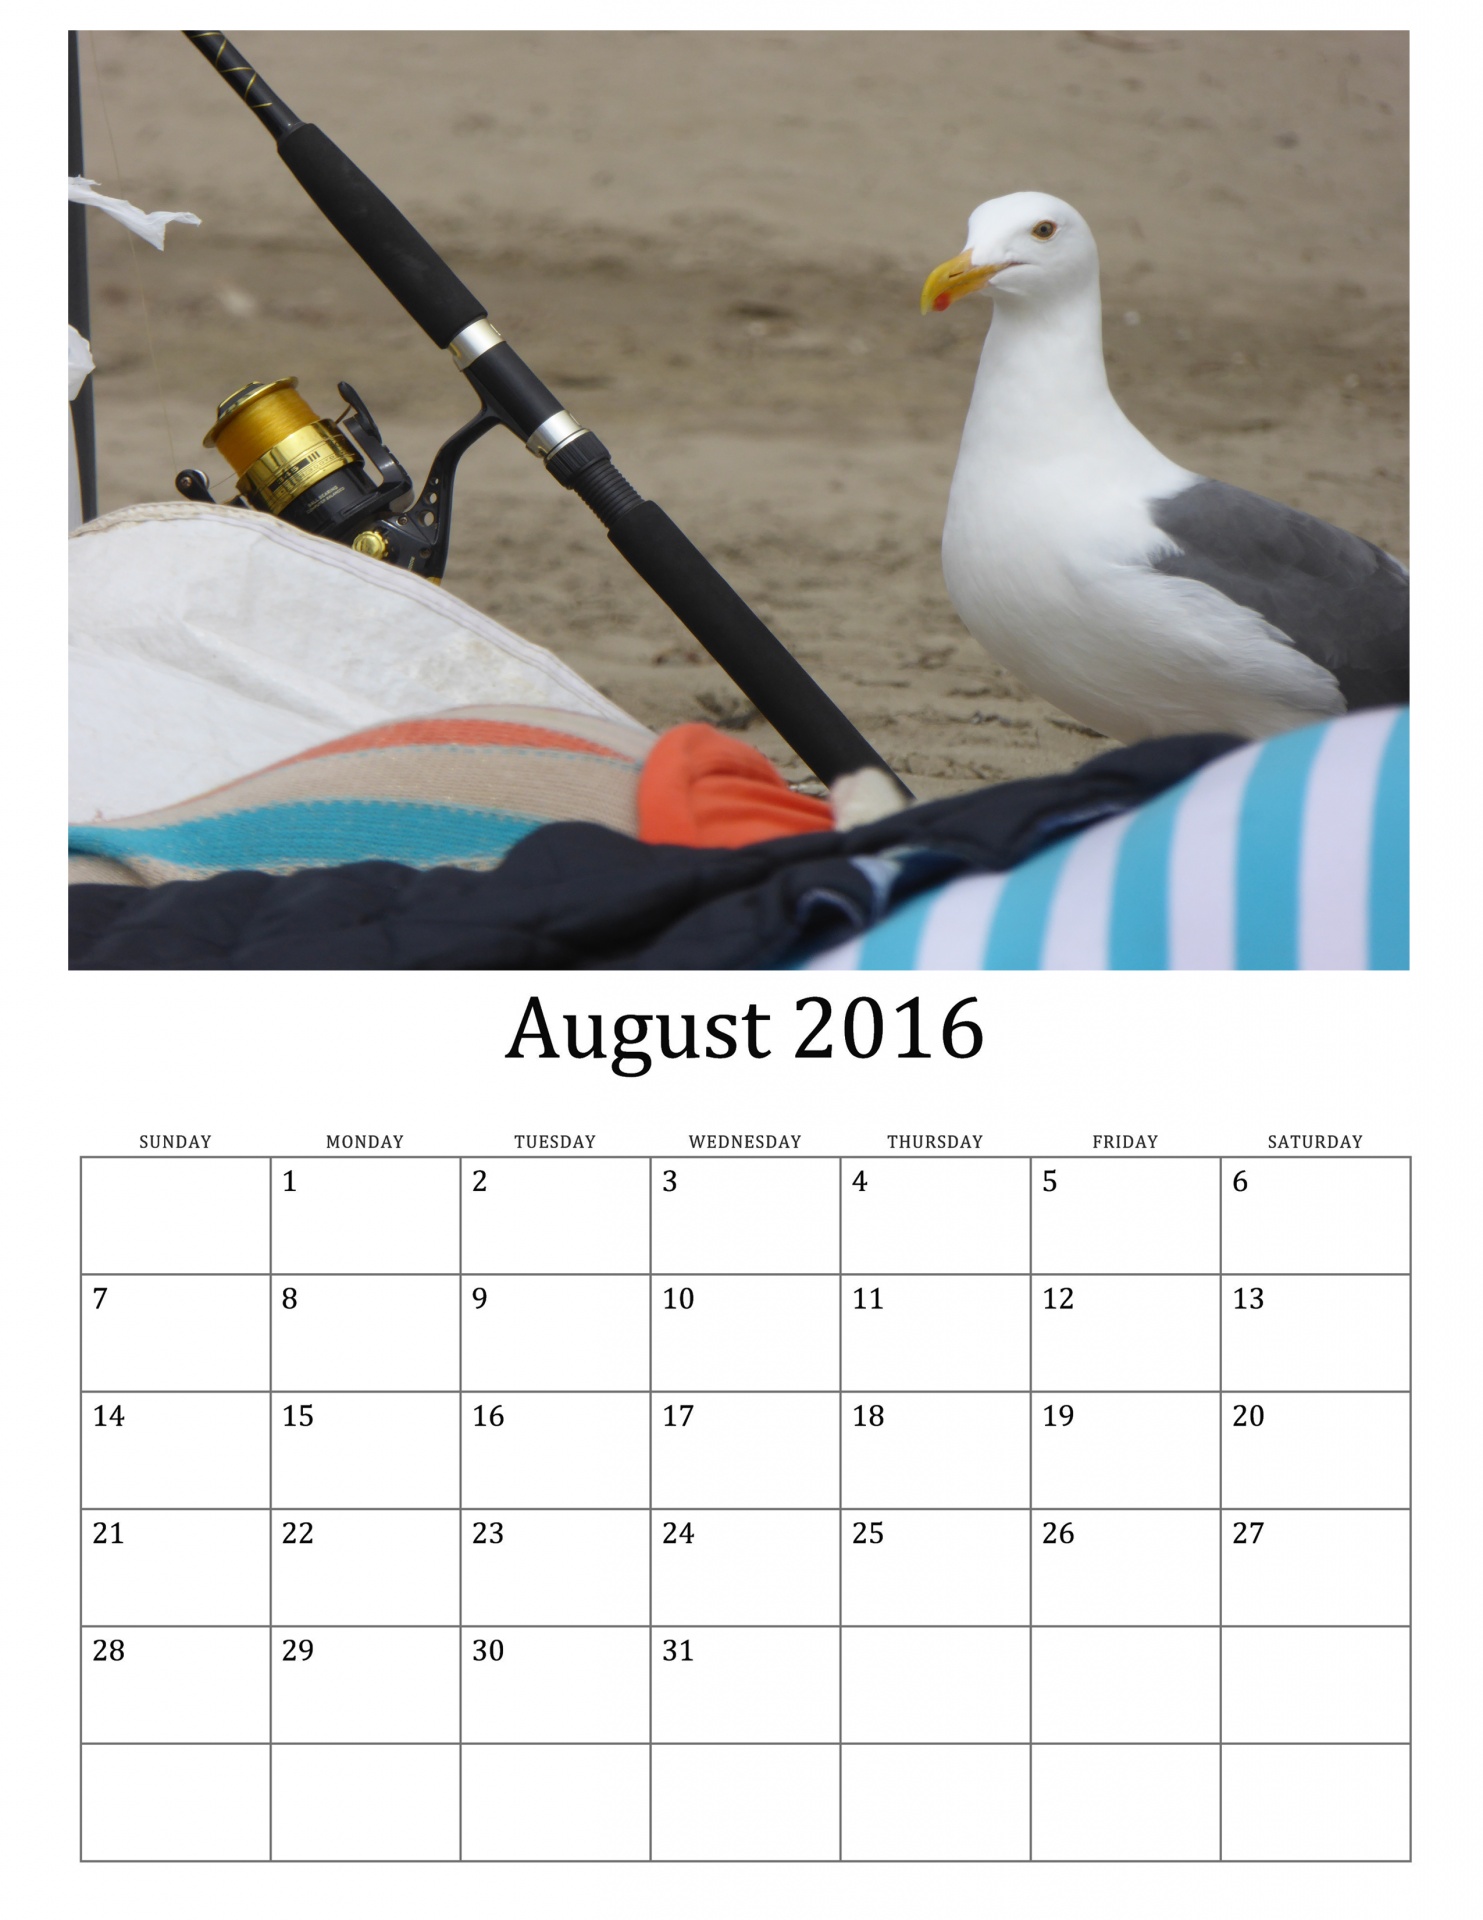 2016 2016 calendar seagull free photo